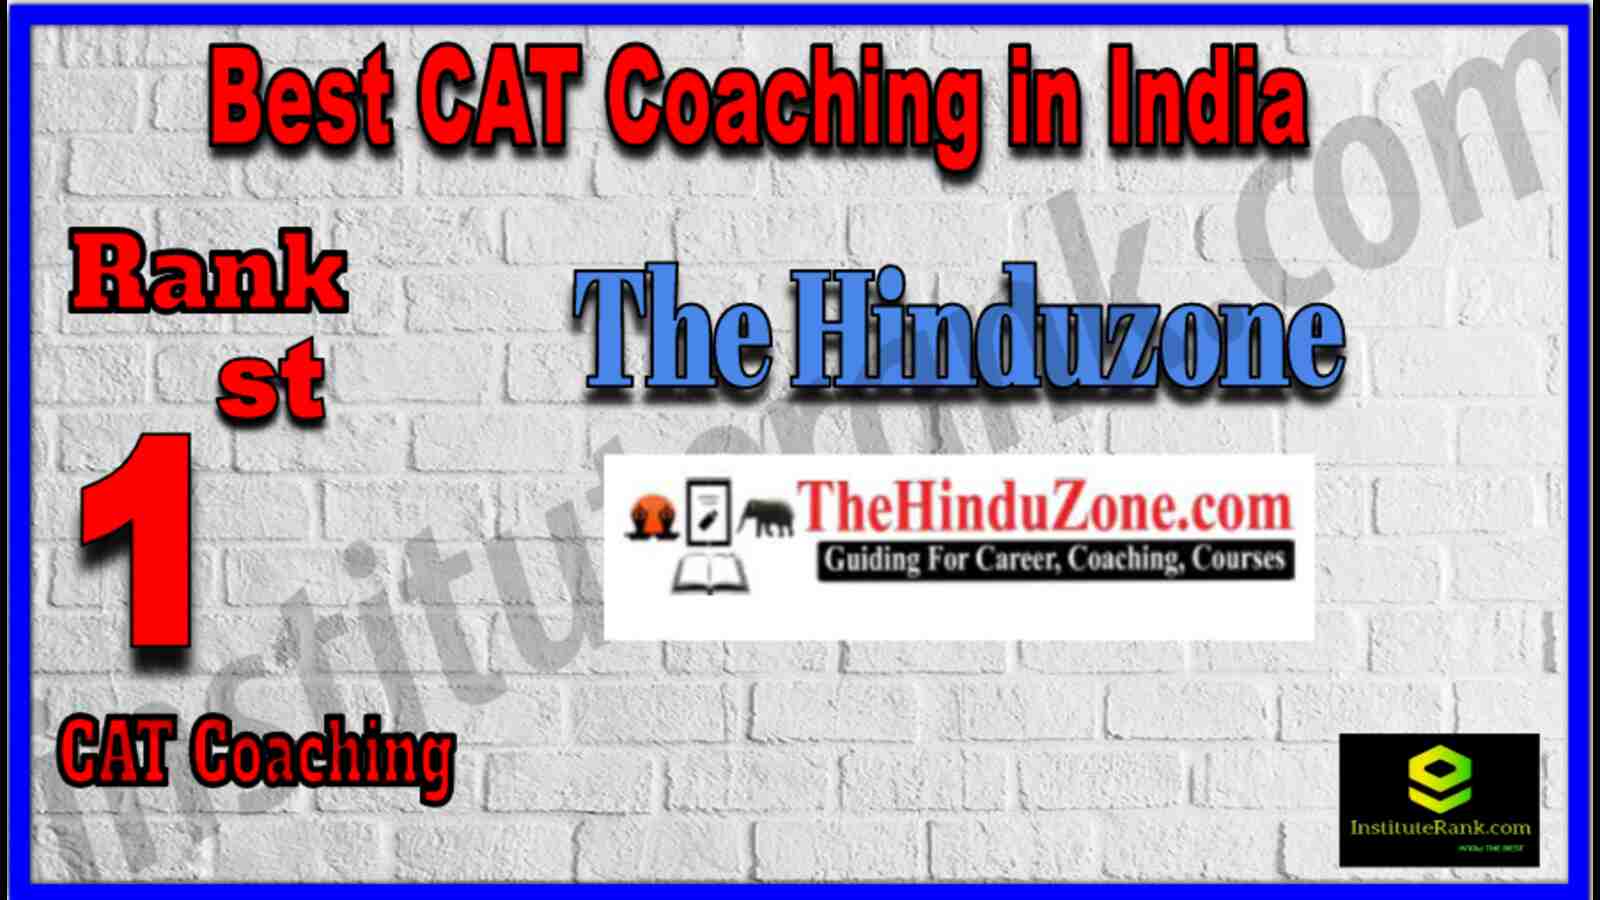 Rank 1 Best CAT Coaching in India